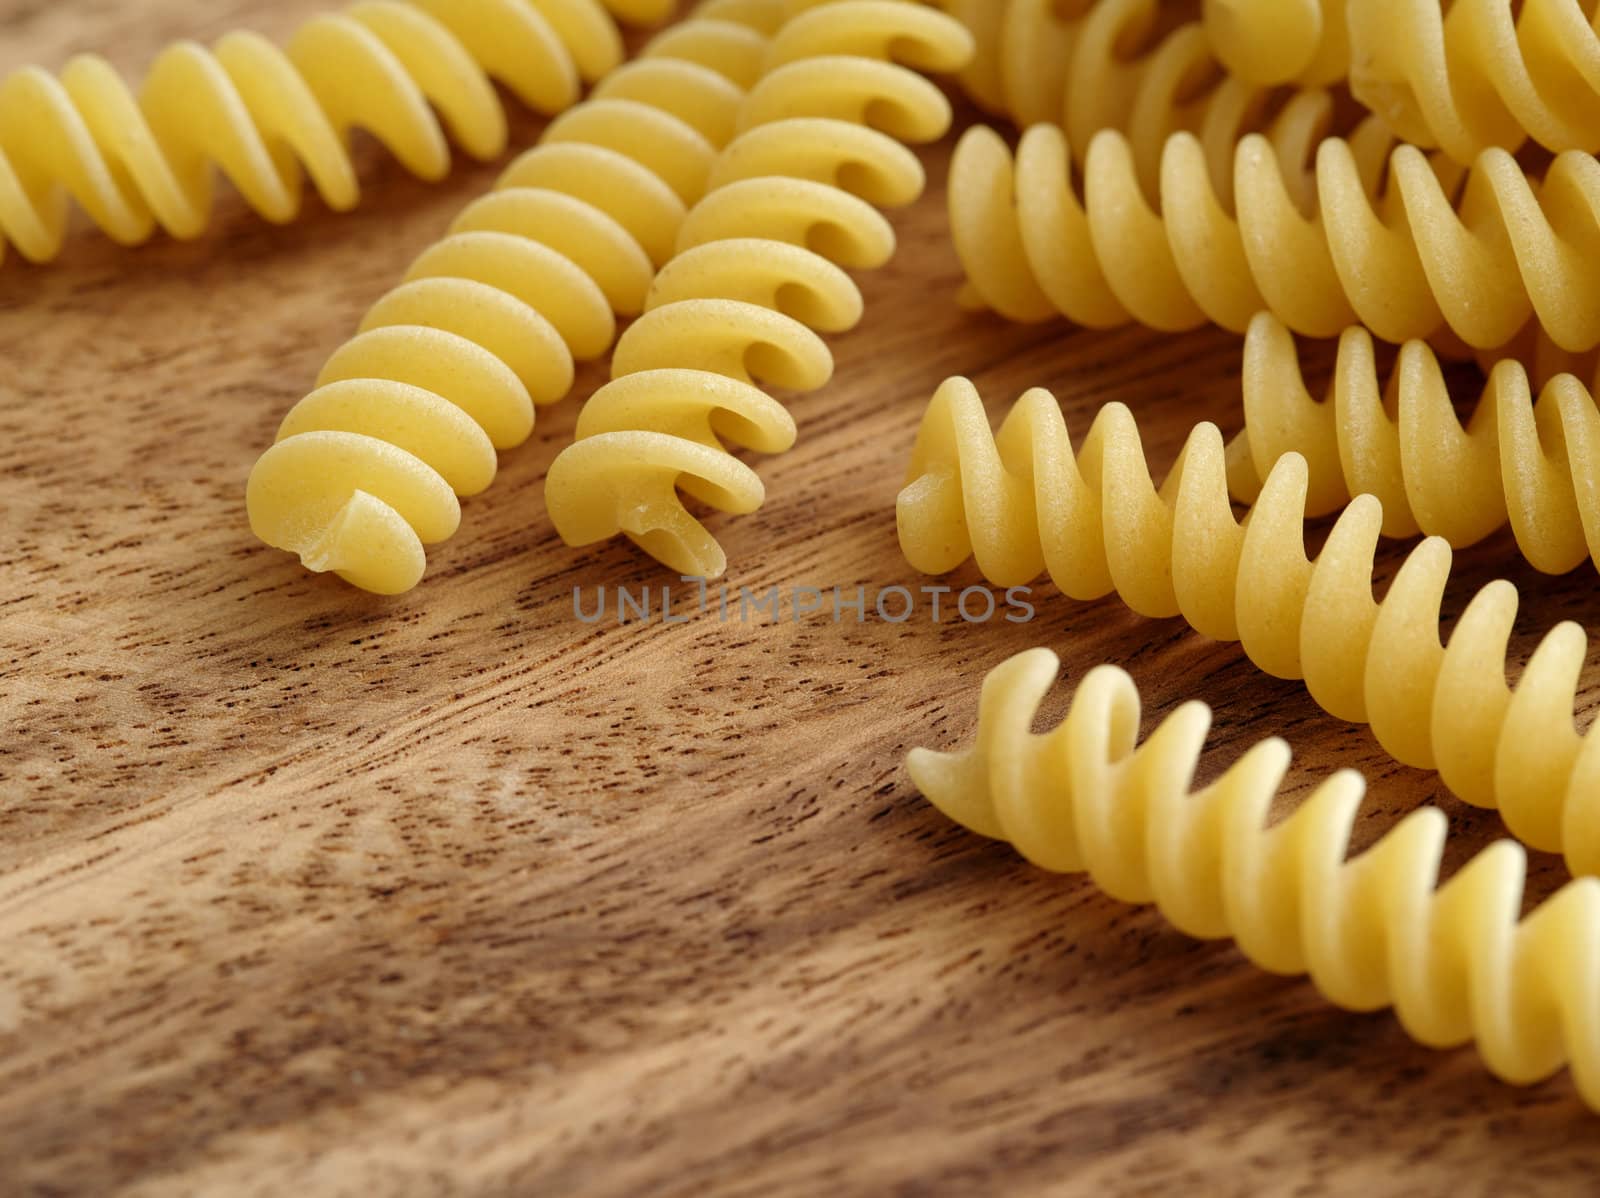 Closeup photo of fusilli dry pasta on a wood table.
